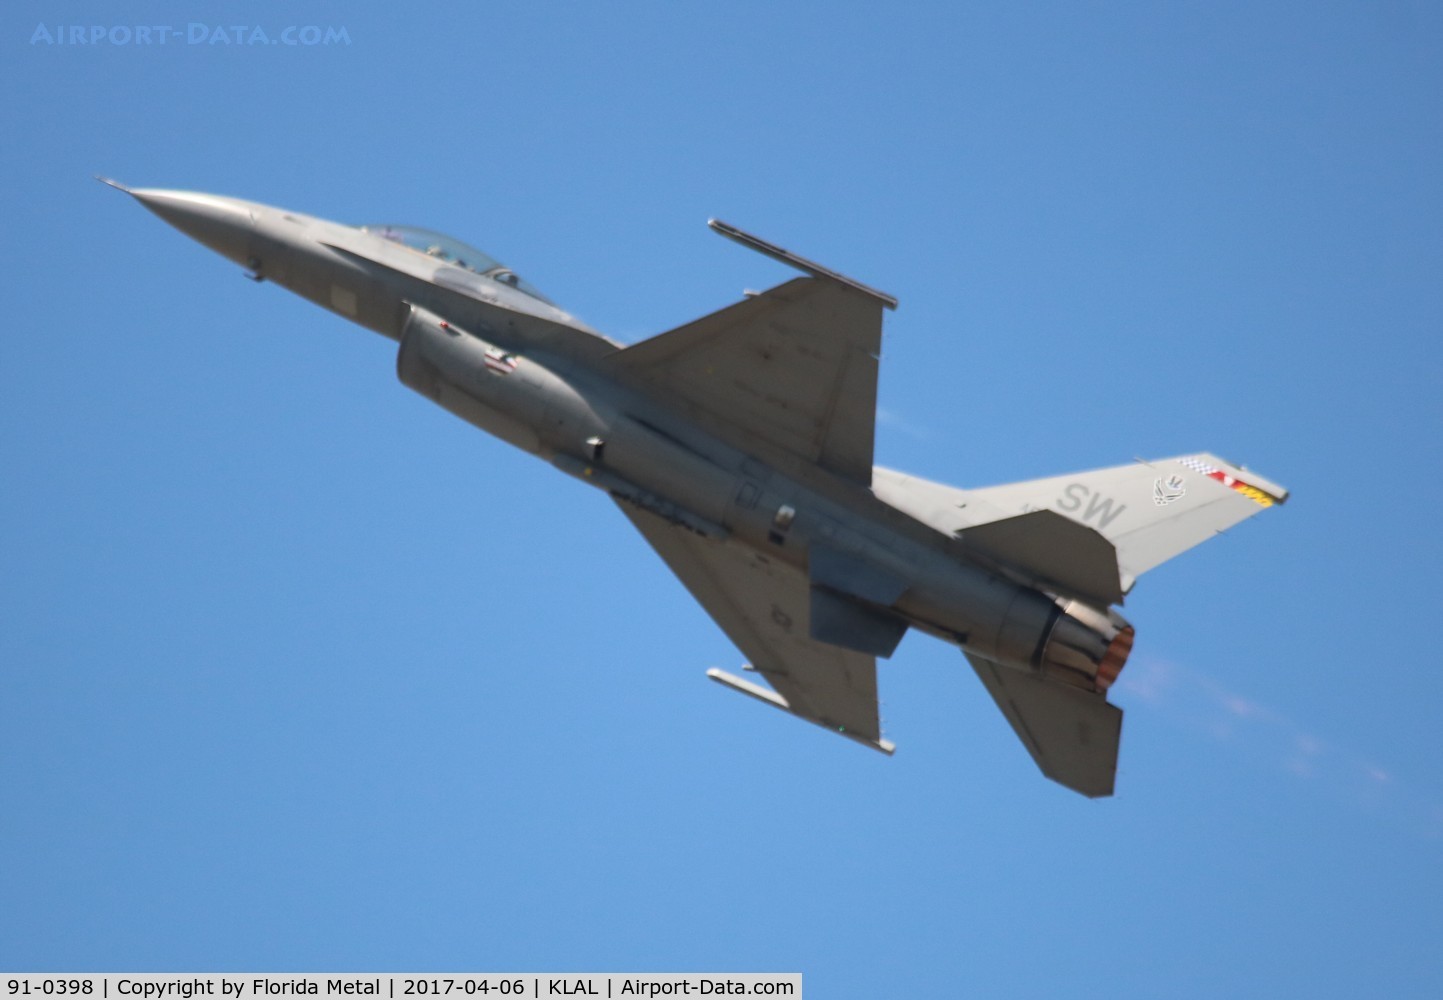 91-0398, 1993 General Dynamics F-16C Fighting Falcon C/N CC-86, F-16 zx